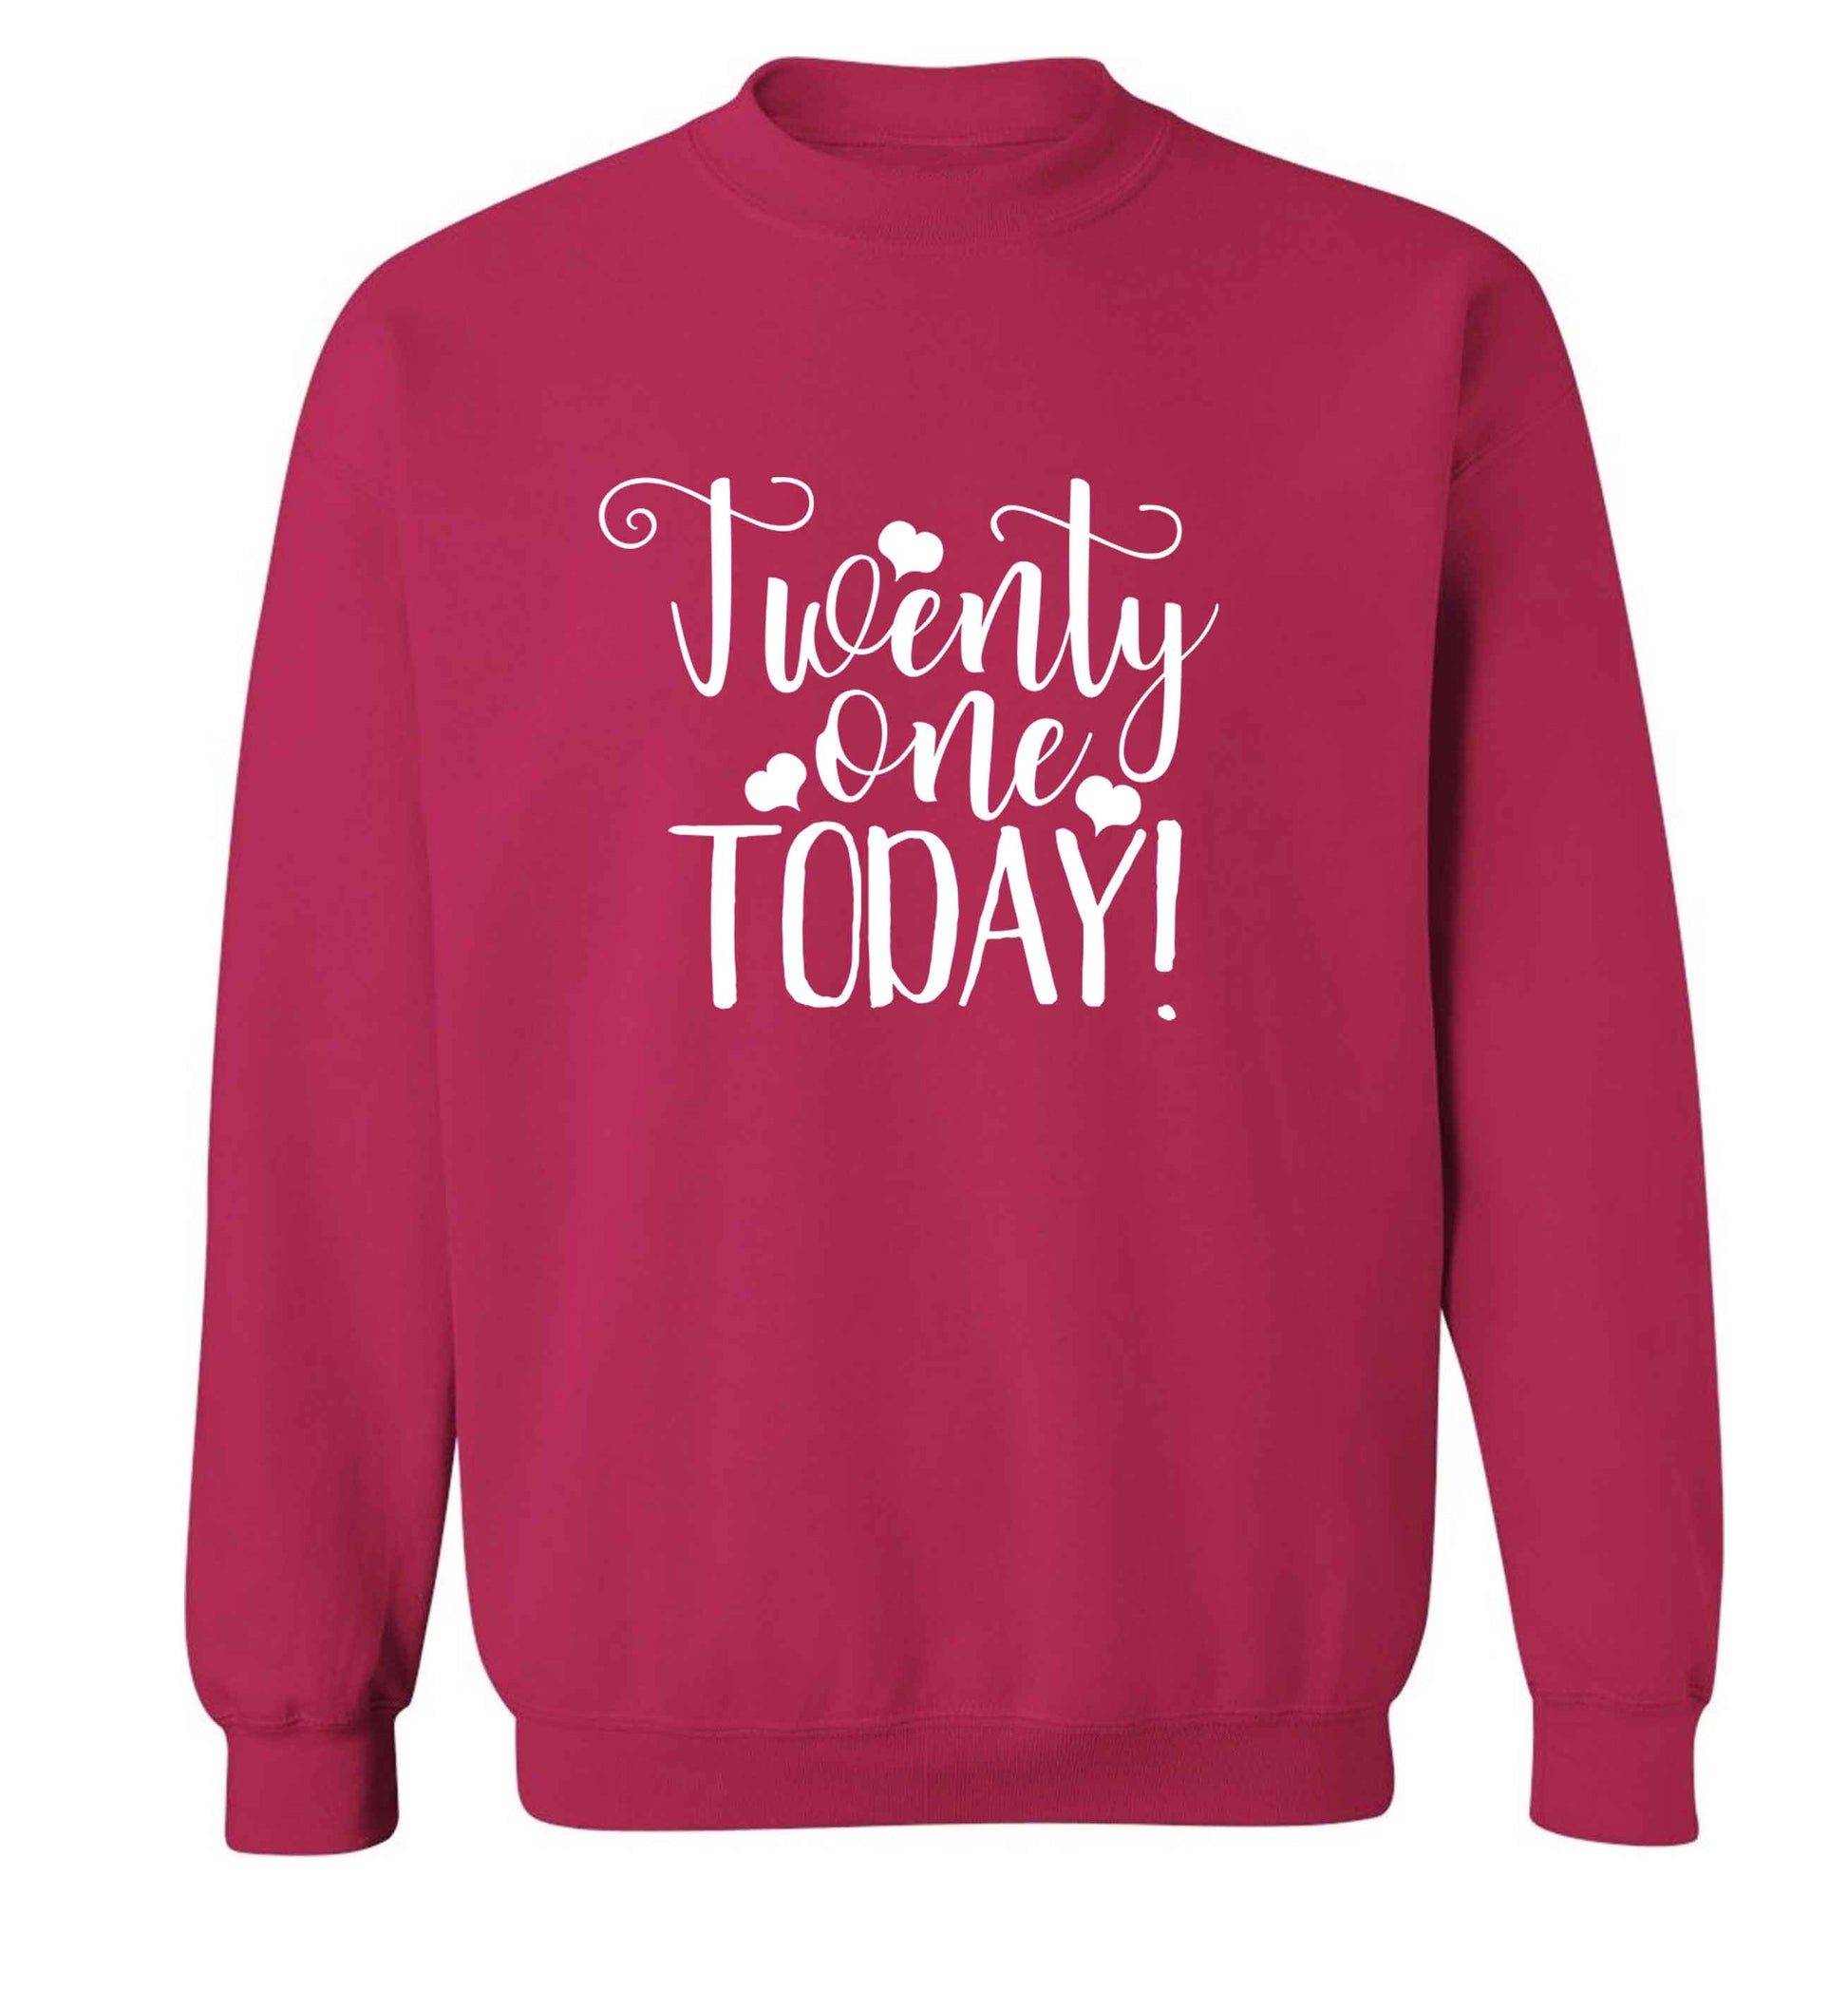 Twenty one today!adult's unisex pink sweater 2XL